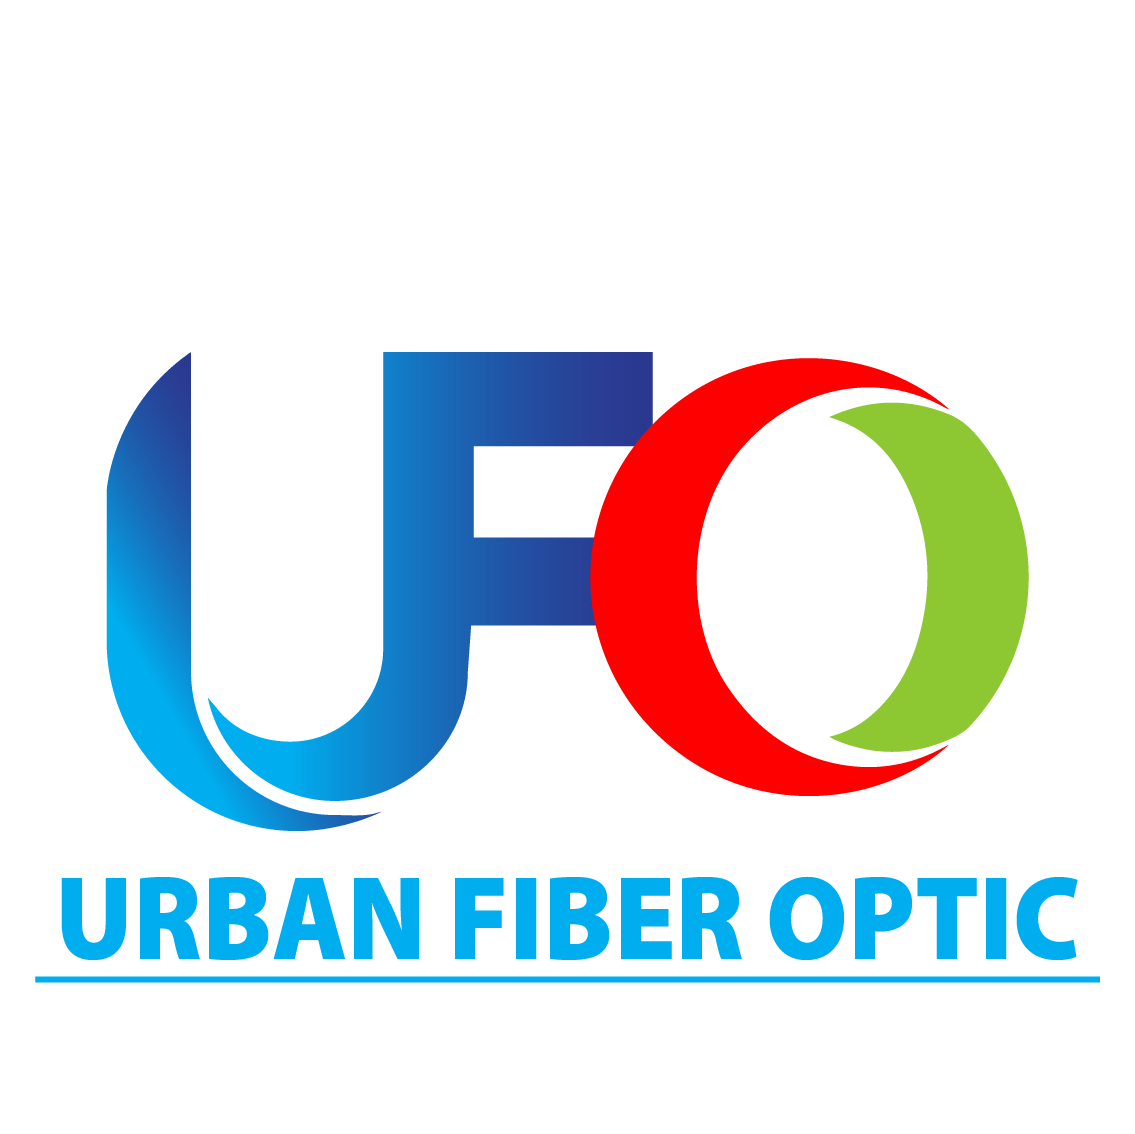 Urban Fiber Optic Limited